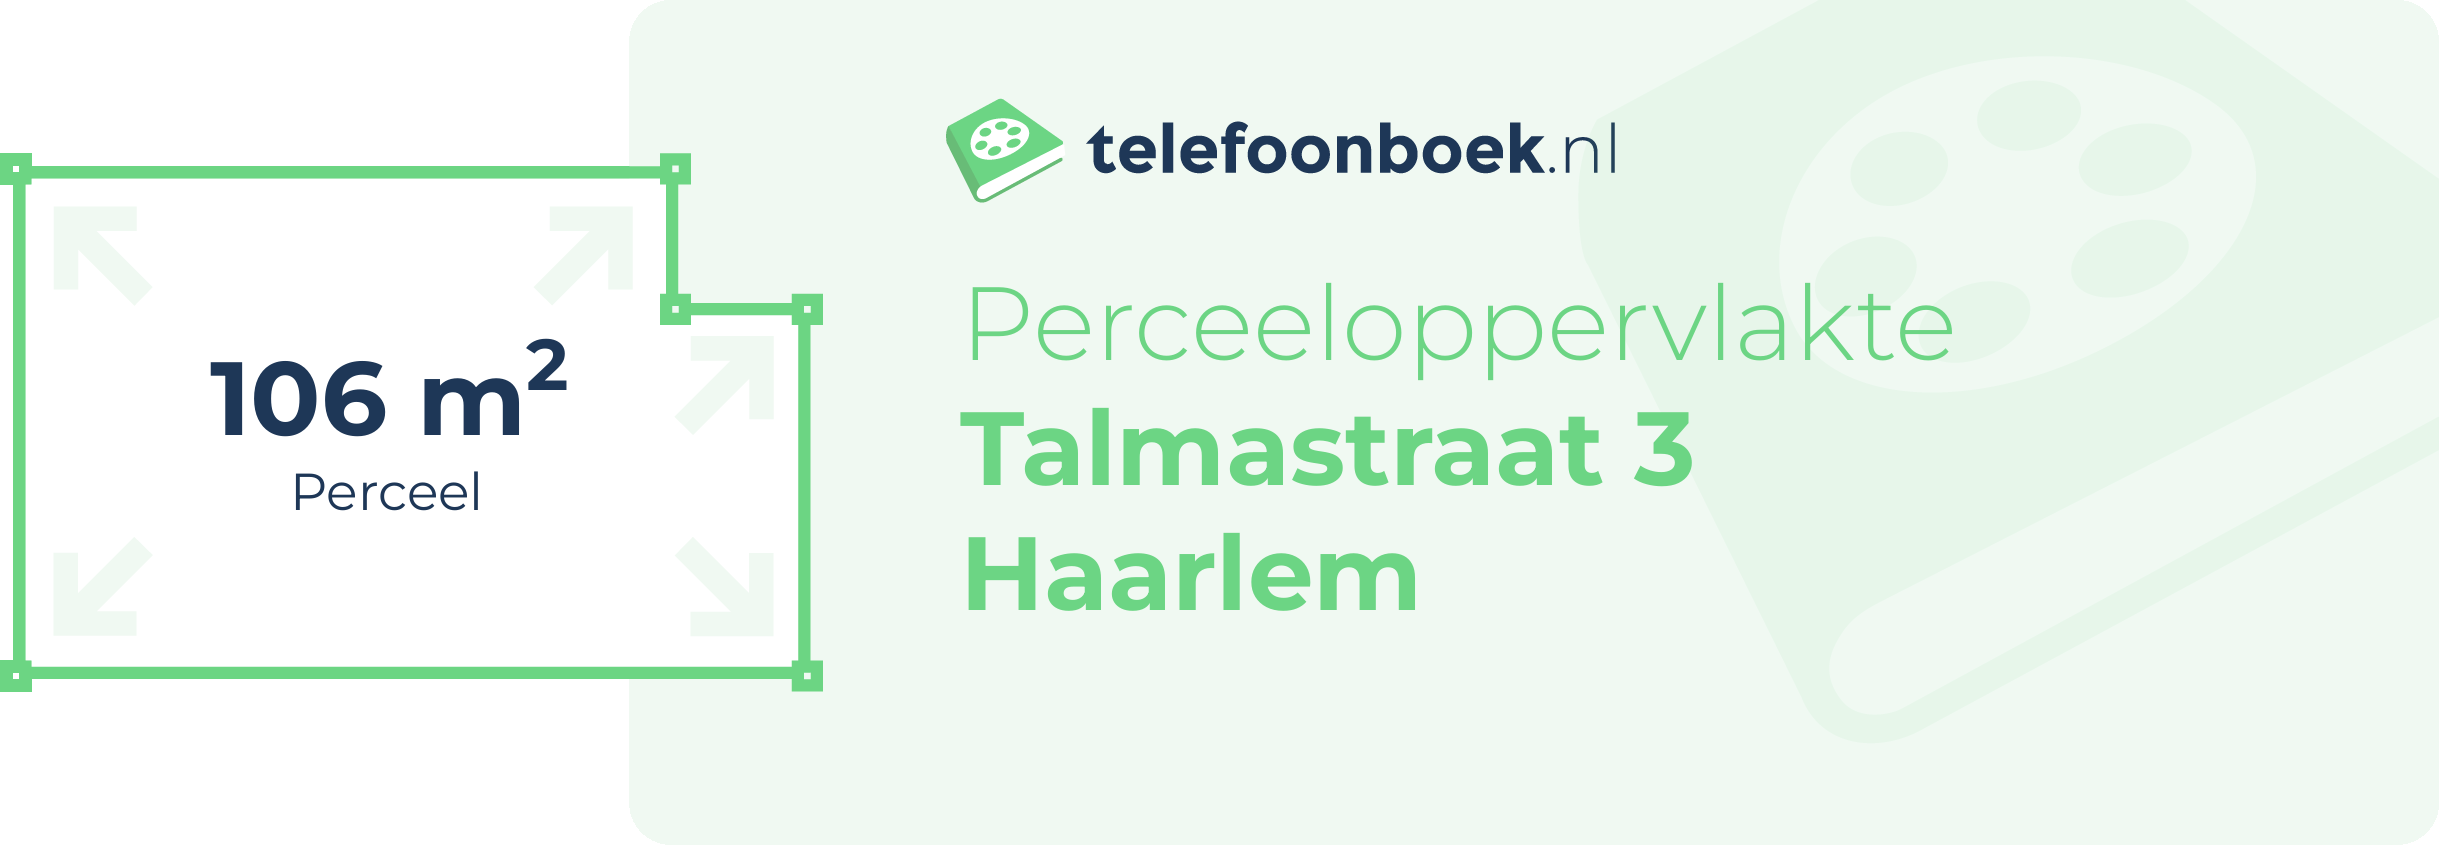 Perceeloppervlakte Talmastraat 3 Haarlem